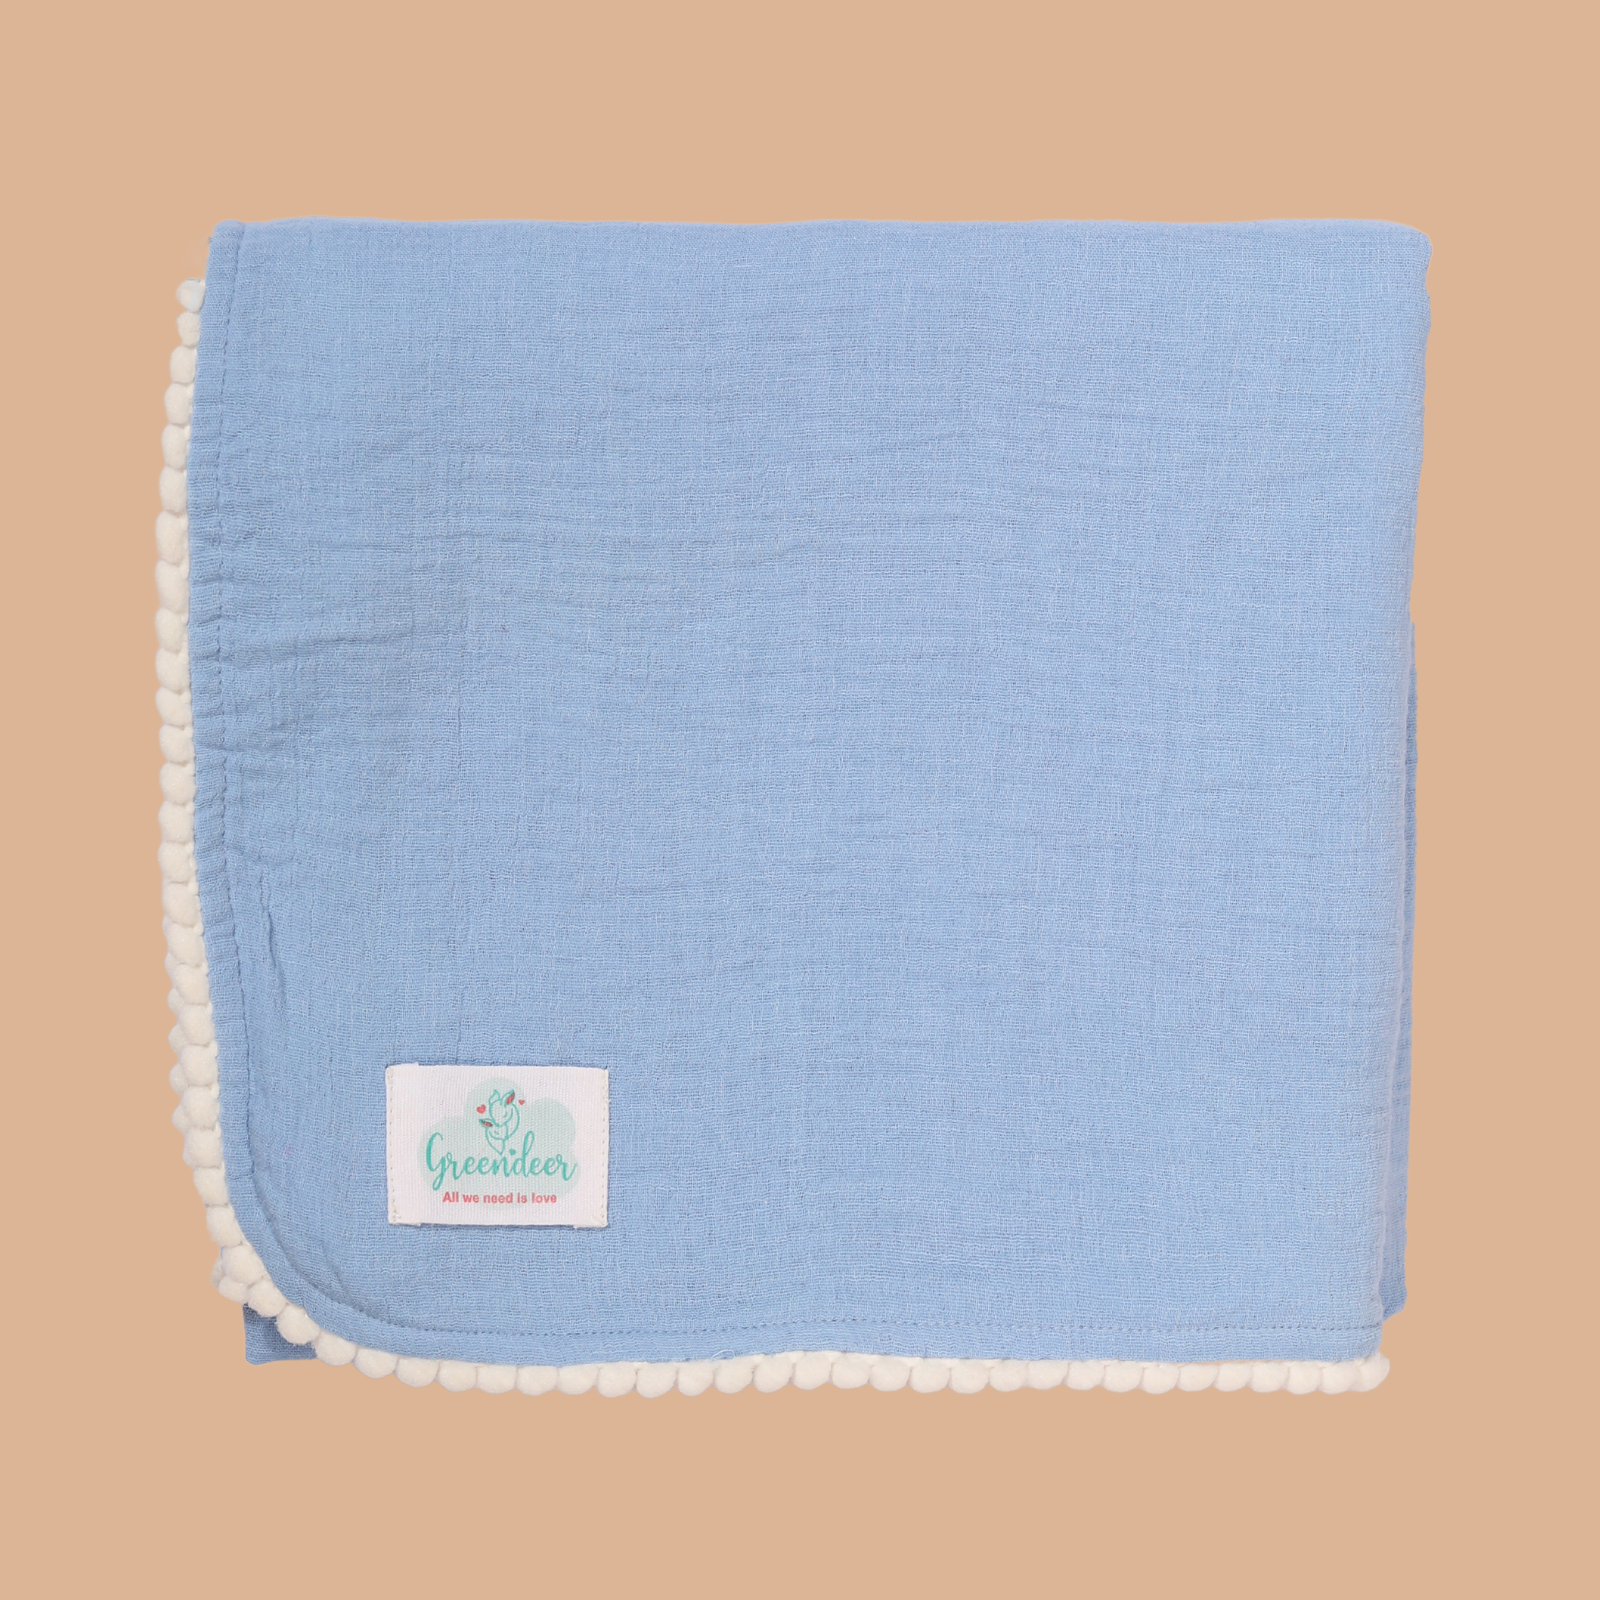 Greendeer 100% Crinkle Cotton Swaddle Cloth - Pack of 4